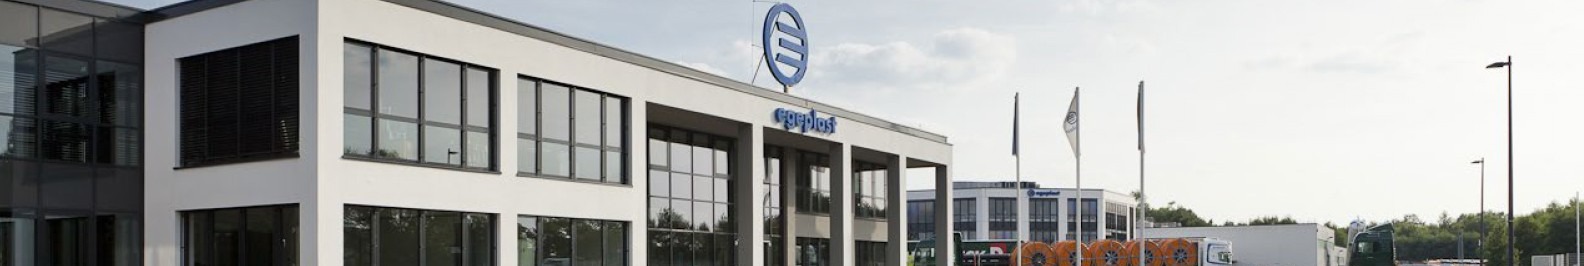 egeplast international GmbH background